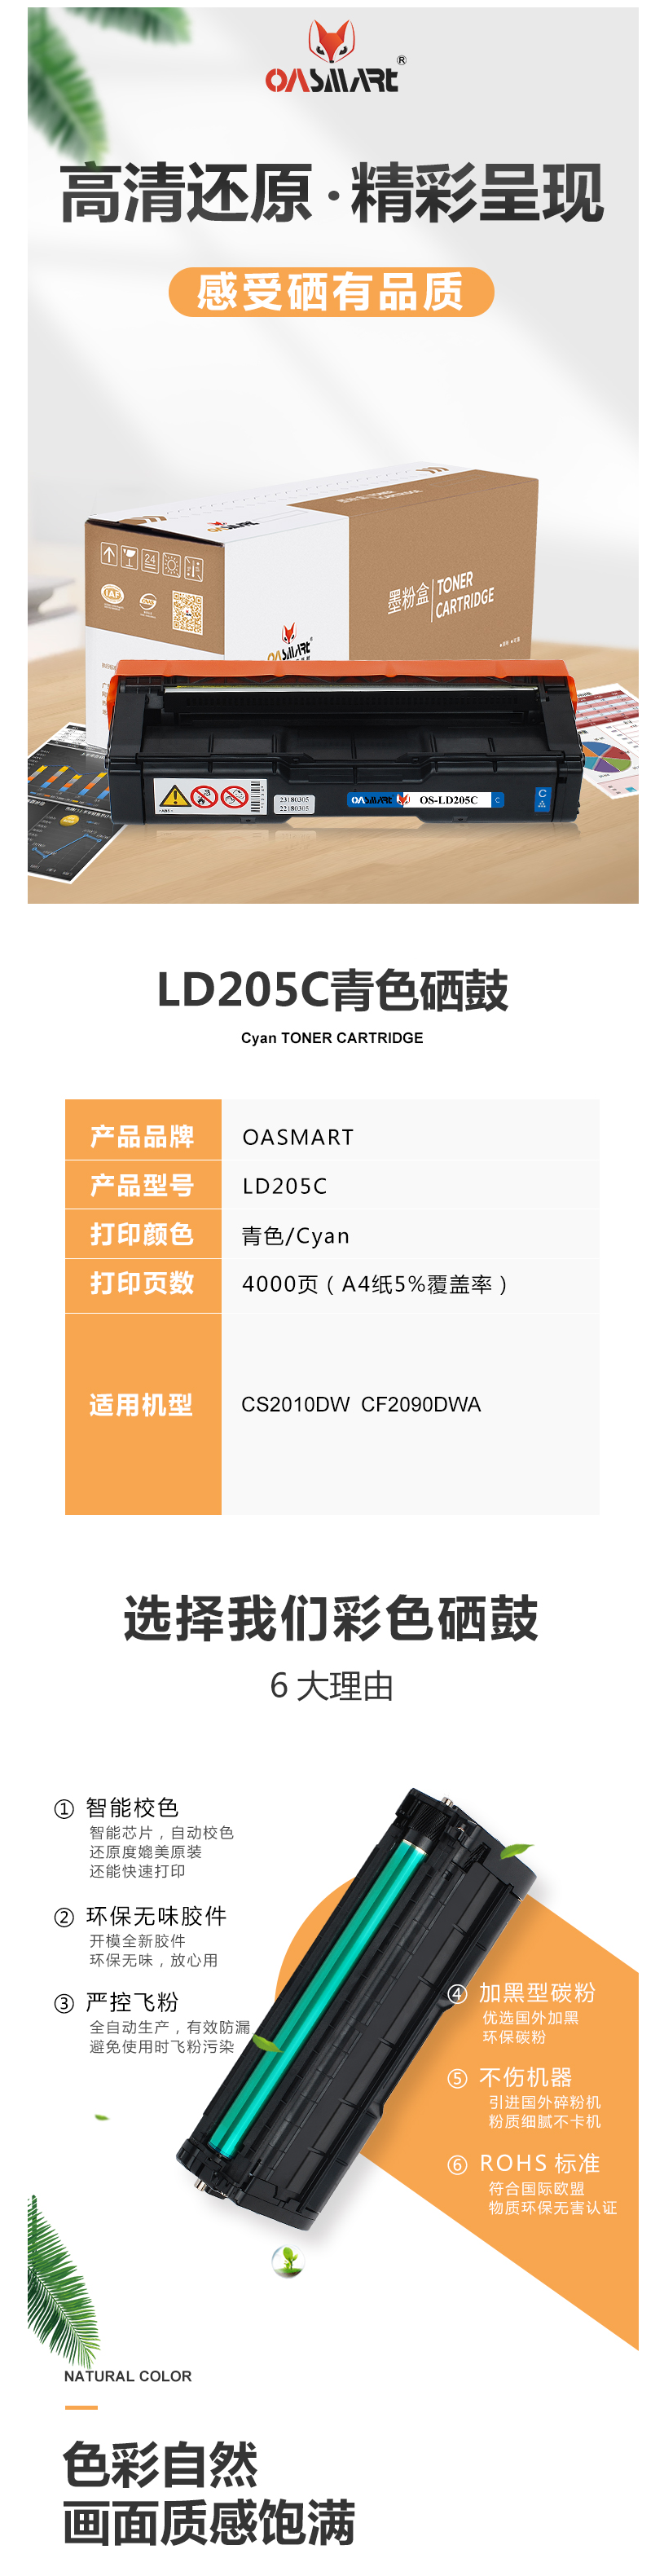 FireShot Capture 603 - 【OASMARTLD205C】OASMART（欧司特）LD205C 青色_ - https___item.jd.com_100016360216.html.png